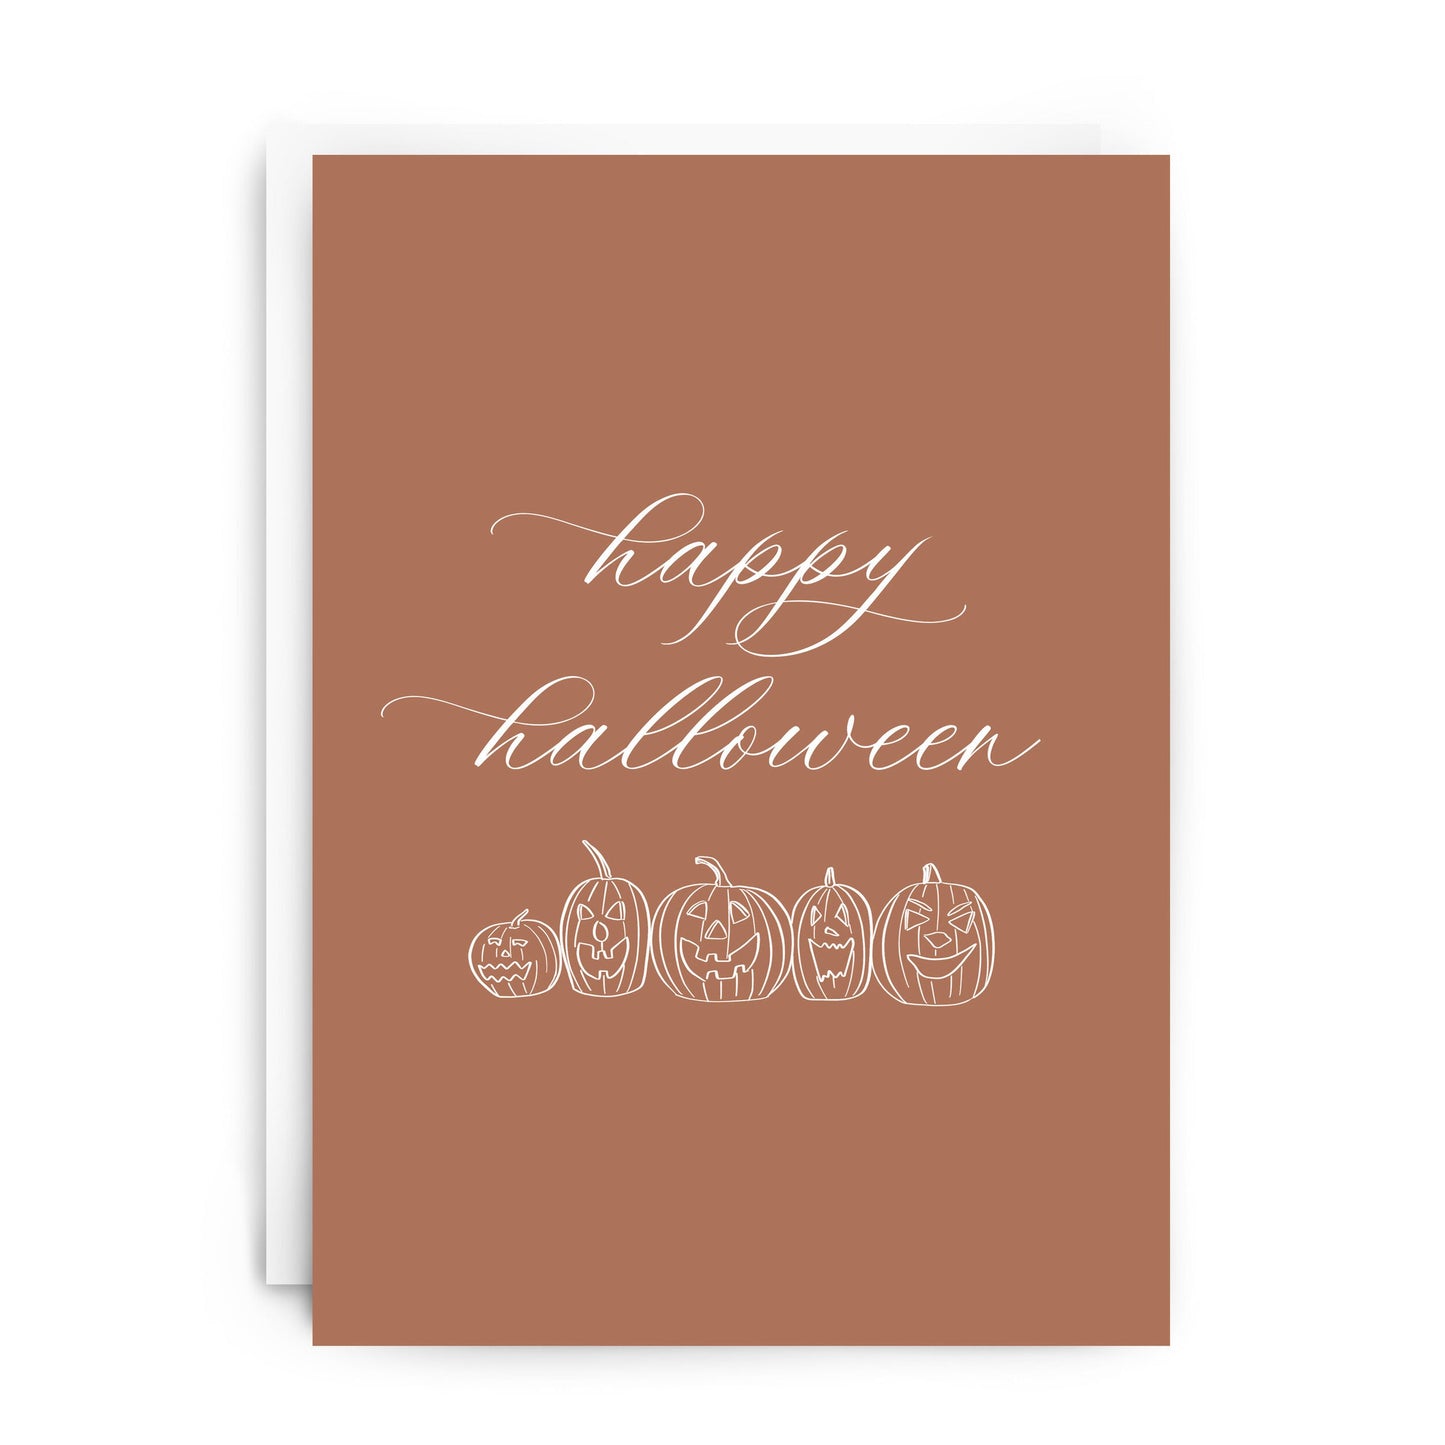 "Happy Halloween" Orange Greeting Card